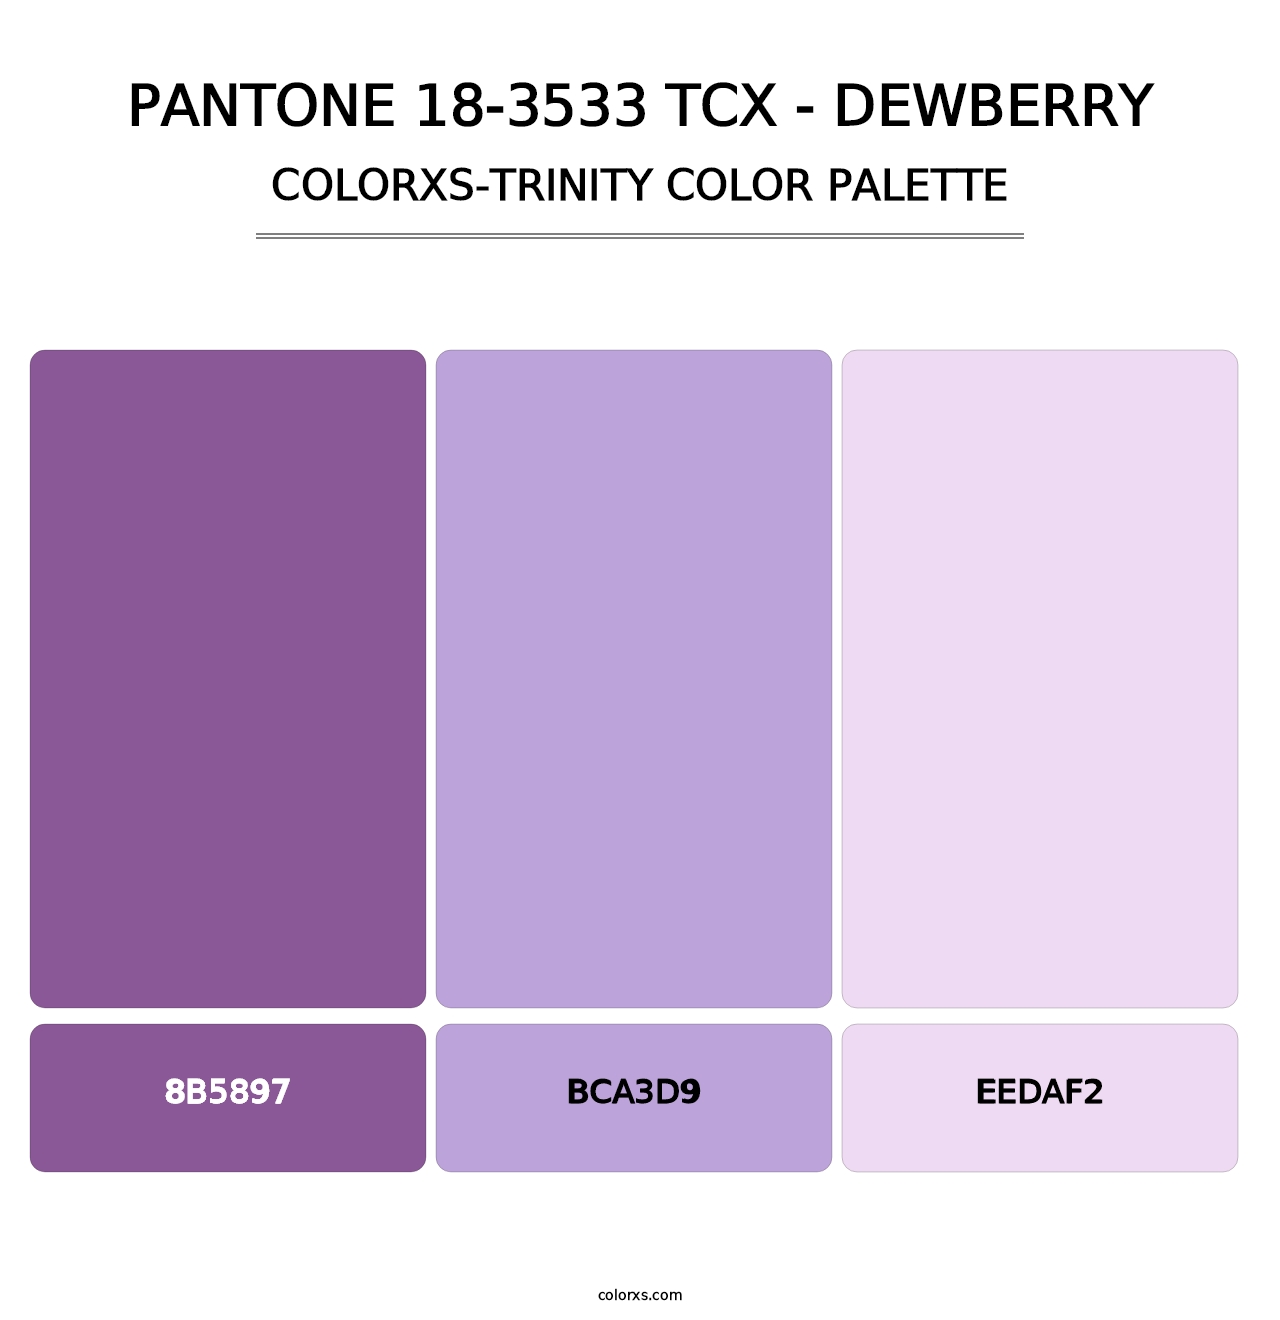 PANTONE 18-3533 TCX - Dewberry - Colorxs Trinity Palette